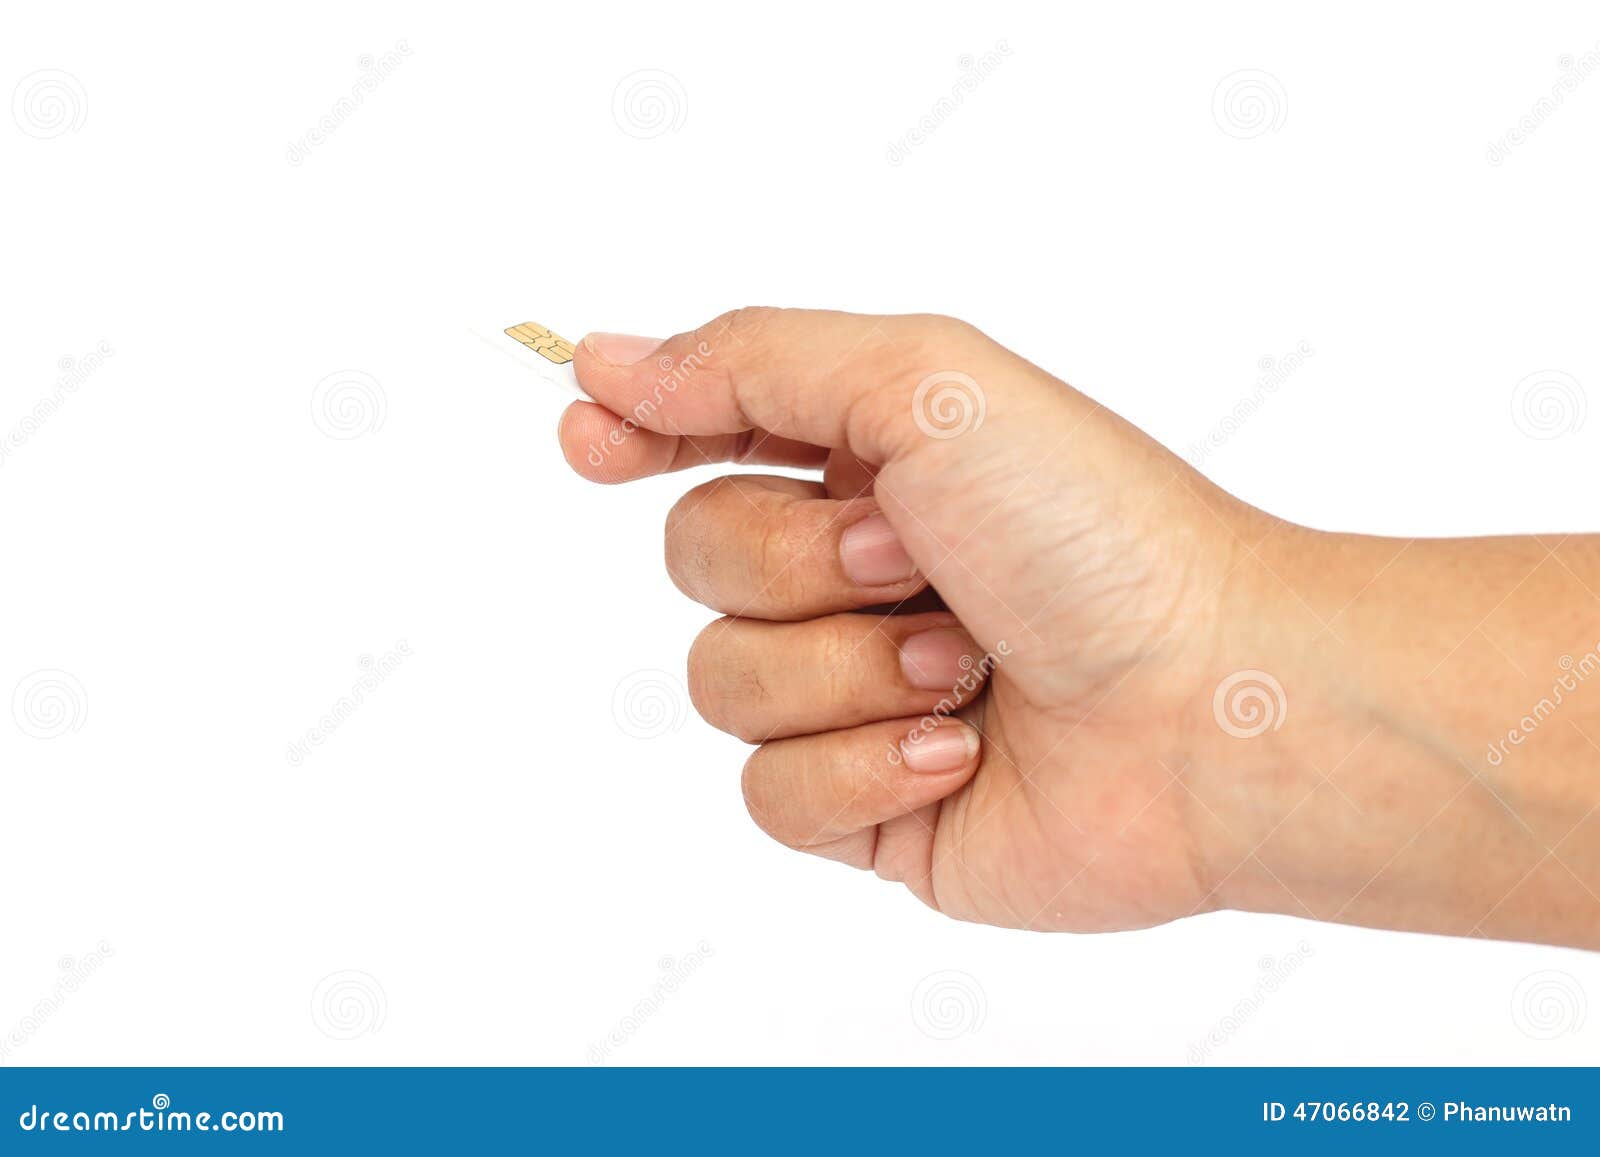 Hand Holding Sim Card Isolated on White Background Stock Photo - Image